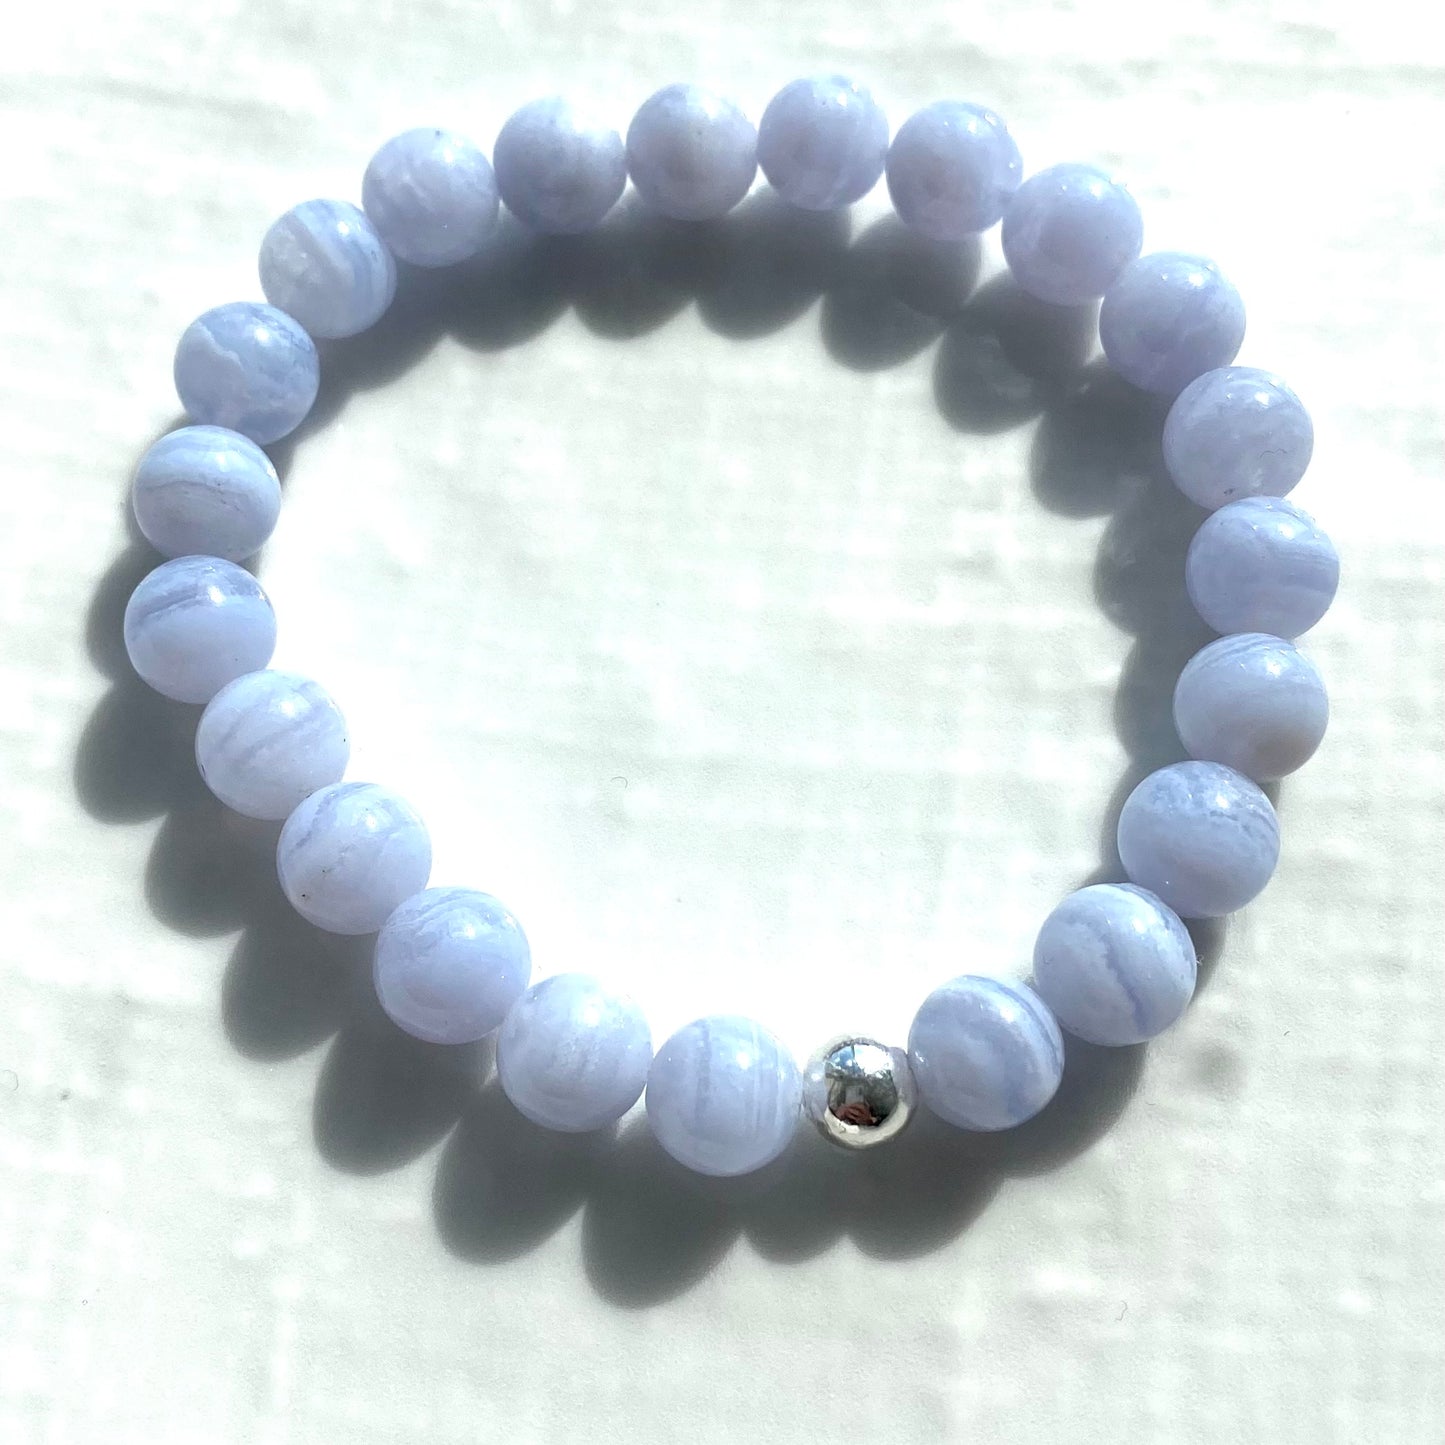 Blue lace agate sterling silver bracelet